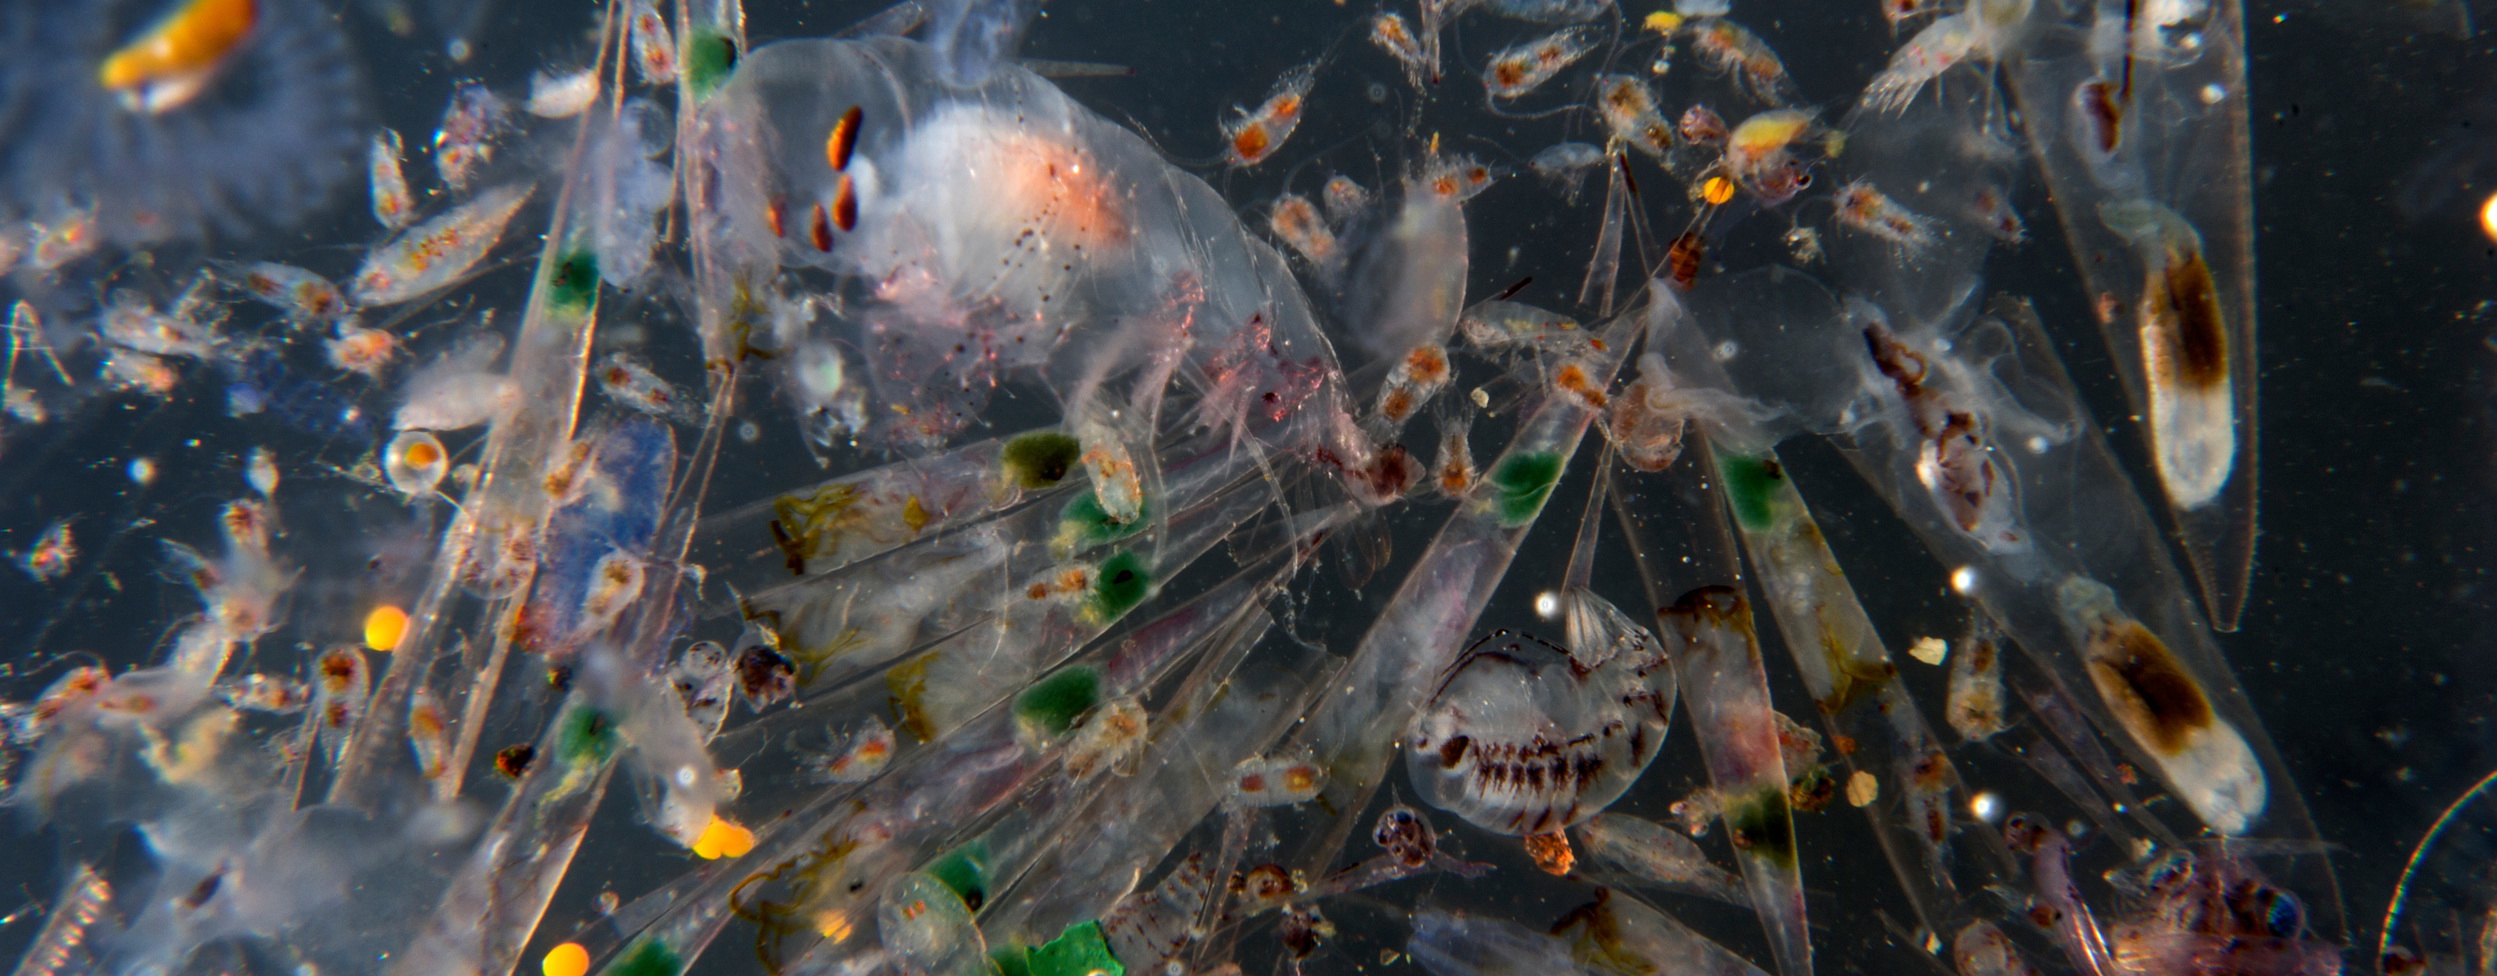 Фитопланктон в море. Морской планктон рачок. Планктон в океане. Микропластик фитопланктона. Фитопланктон Северного Ледовитого океана.